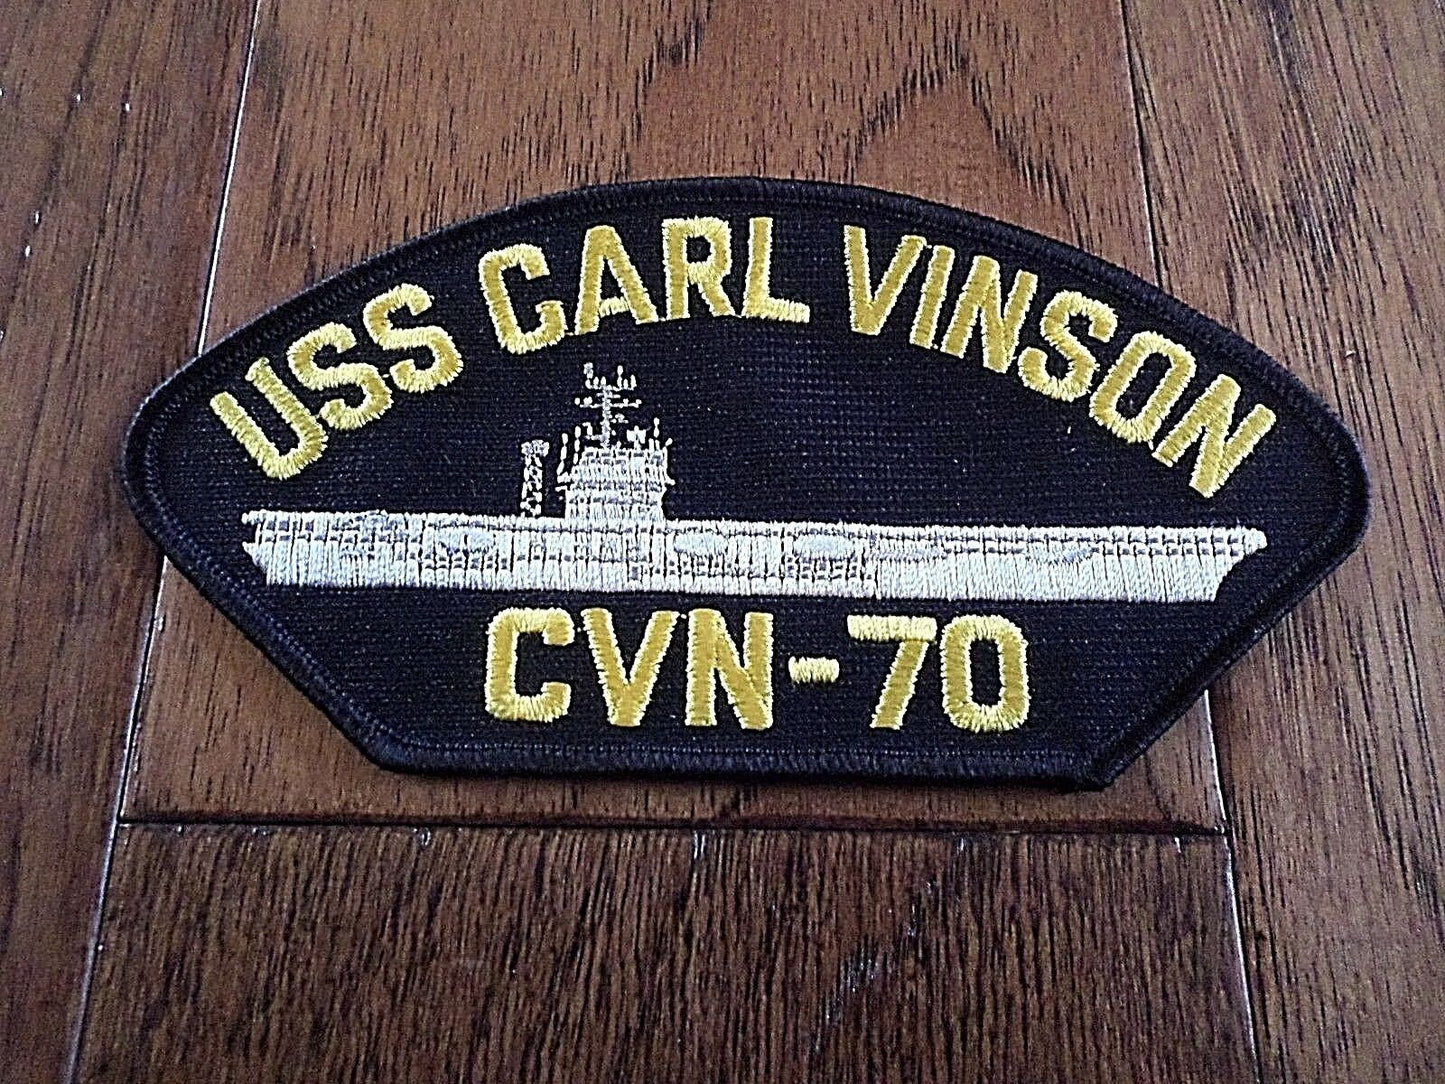 USS CARL VINSON CVN-70 U.S.MILITARY NAVY CARRIER SHIP HAT PATCH U.S.A MADE